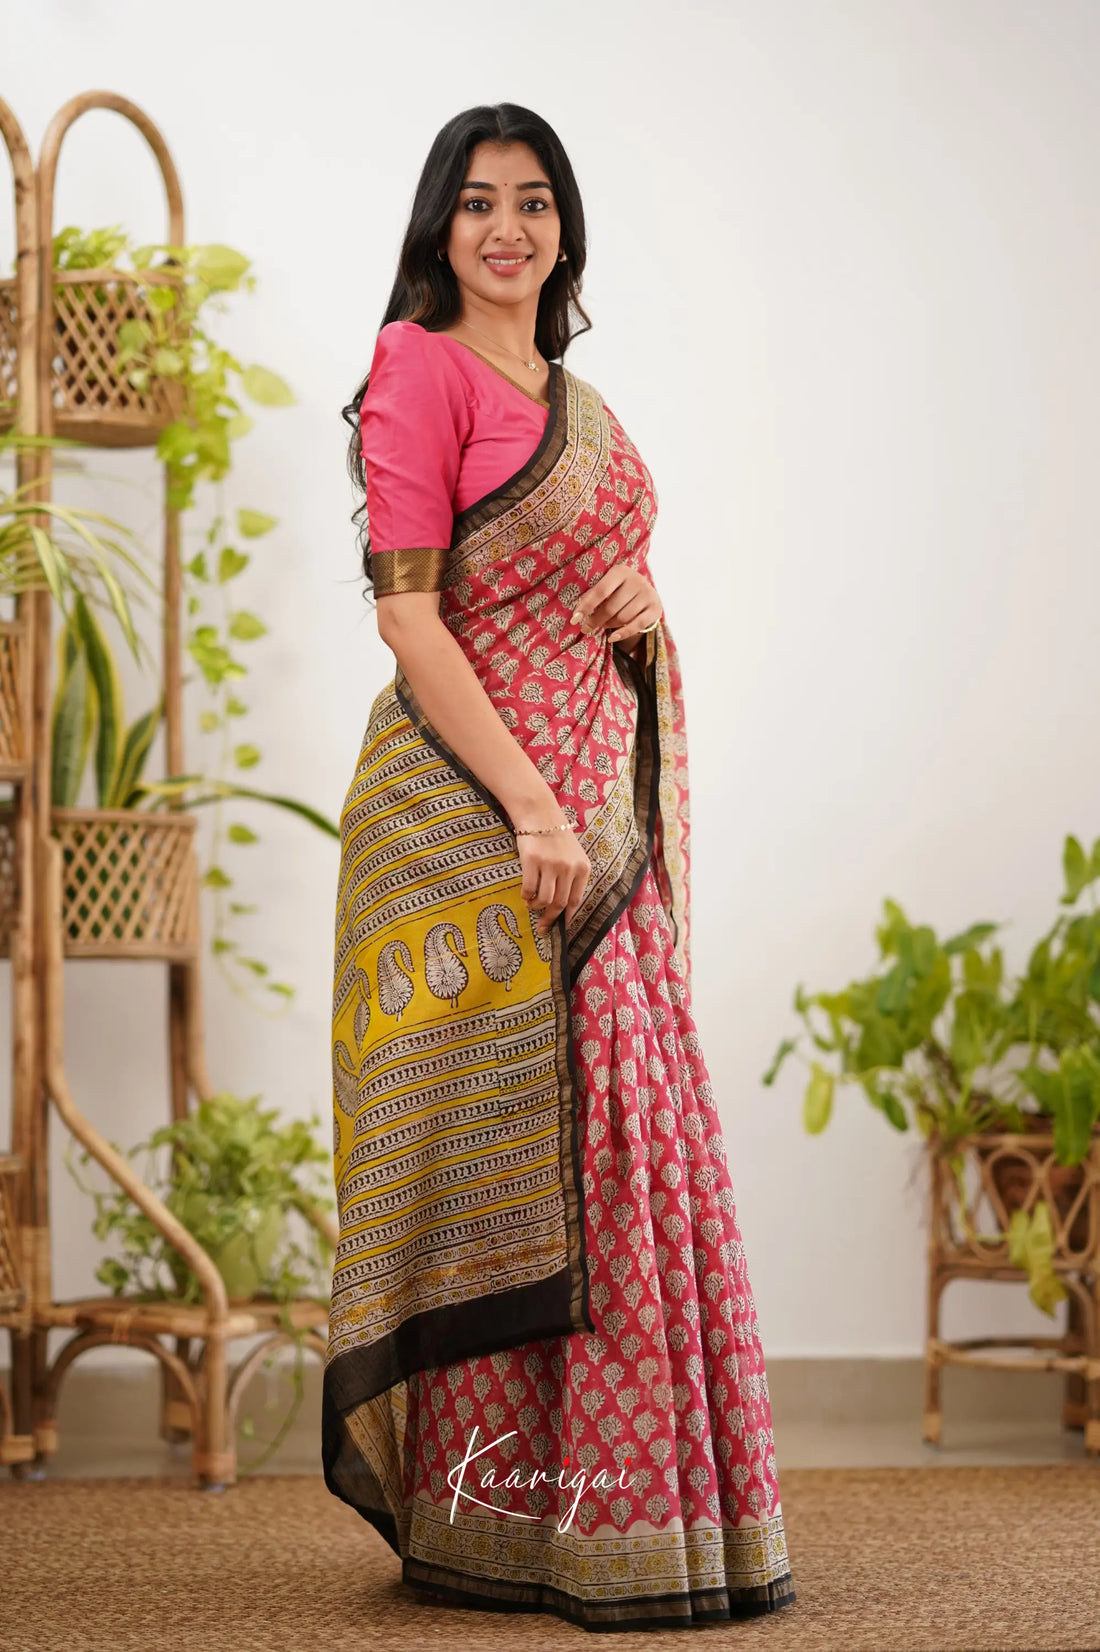 Chaavi Chanderi Saree - Bright Pink And Black Sarees